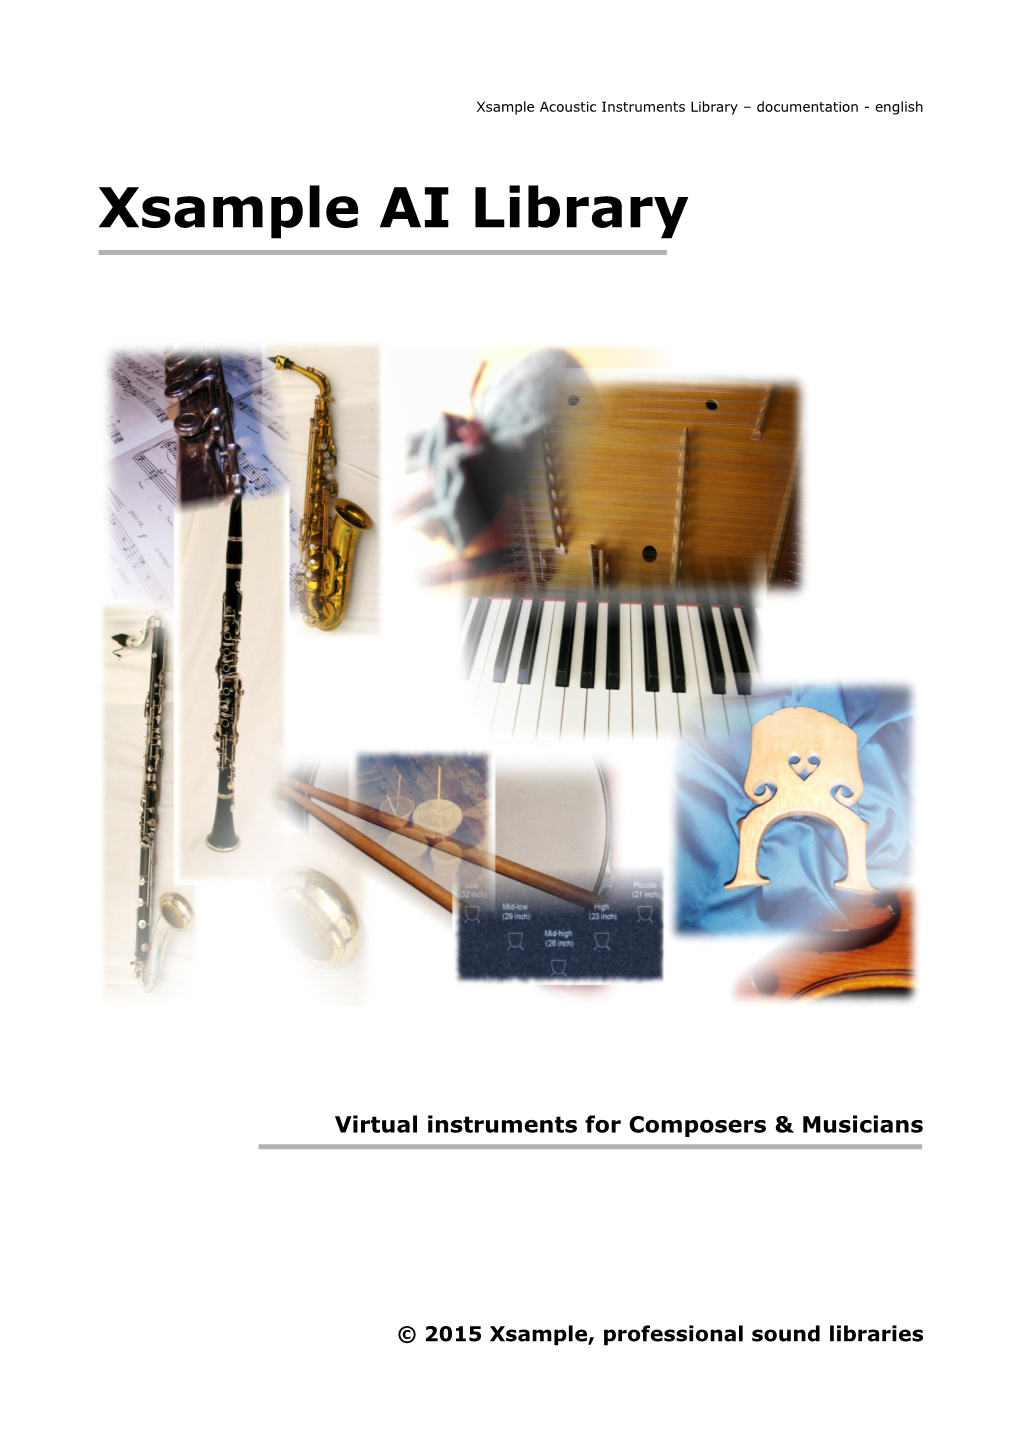 Xsample AI Library